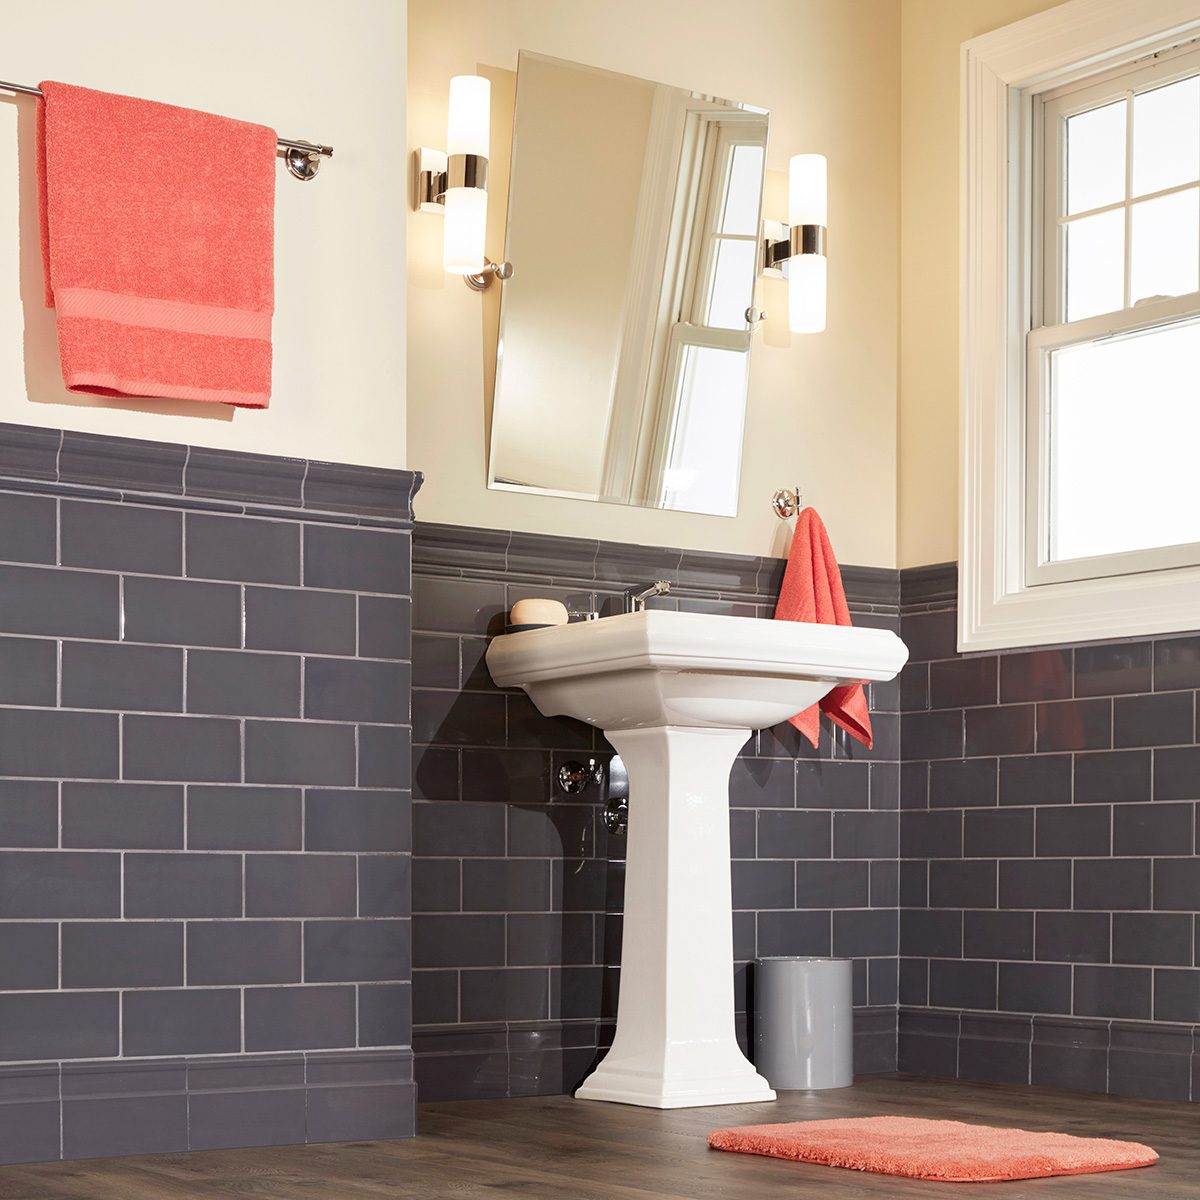 15 Tips for Installing Bathroom Subway Tiles